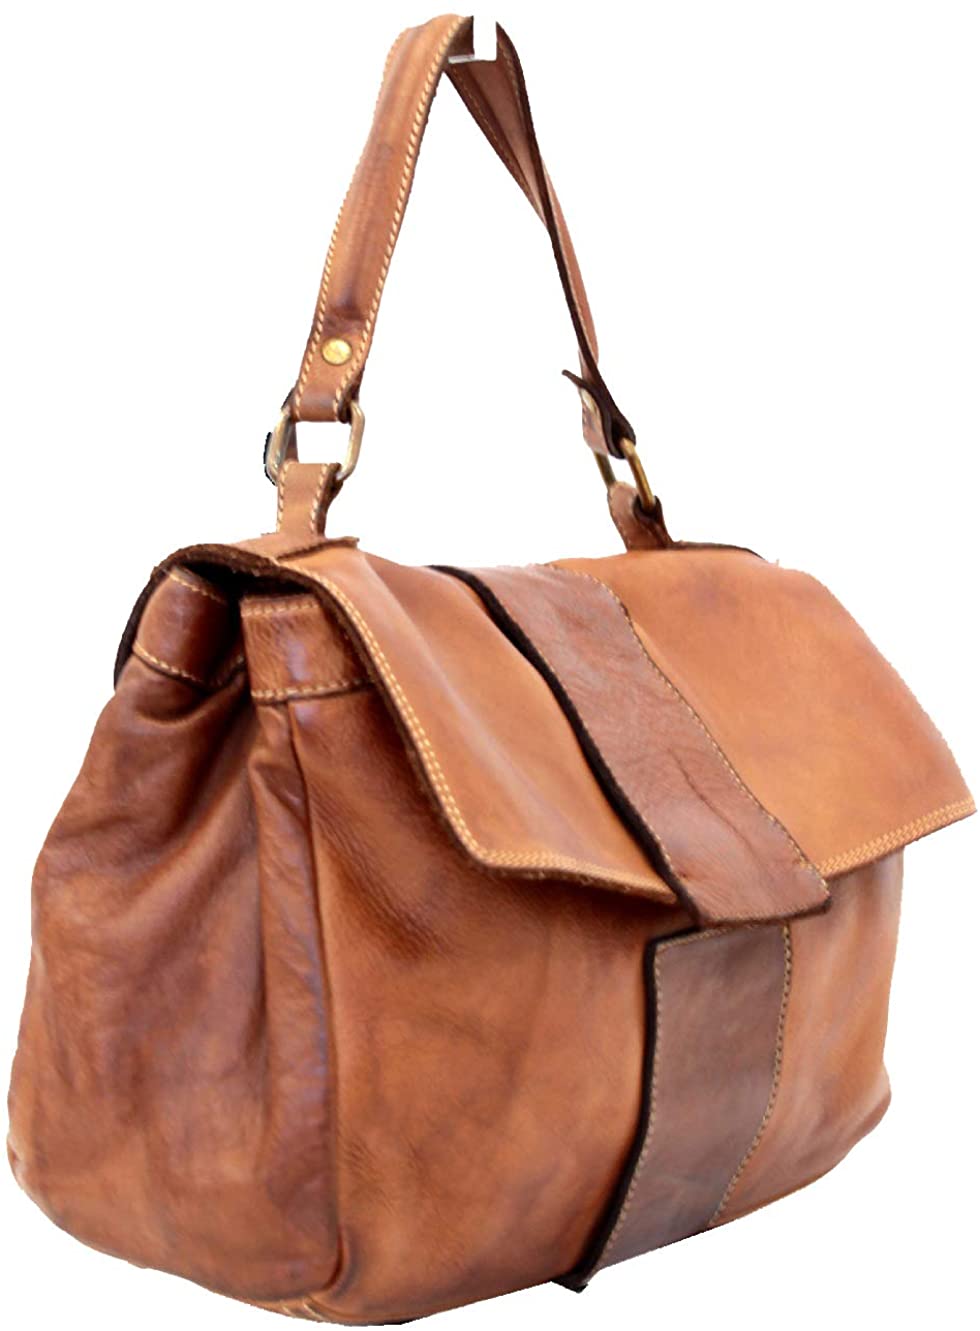 BZNA Bag Santa rosa Italy Designer Damen Handtasche Ledertasche Schultertasche Tasche Leder Shopper Neu